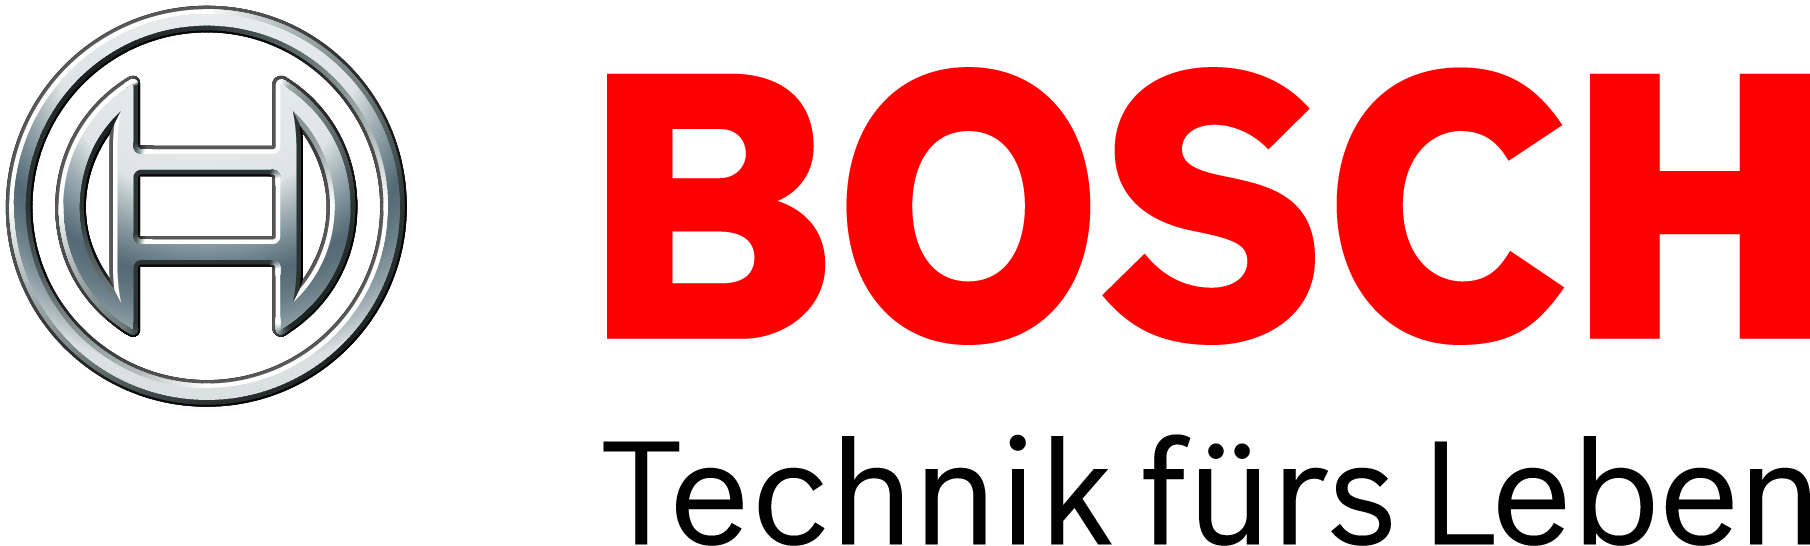 Bosch Software Innovations GmbH